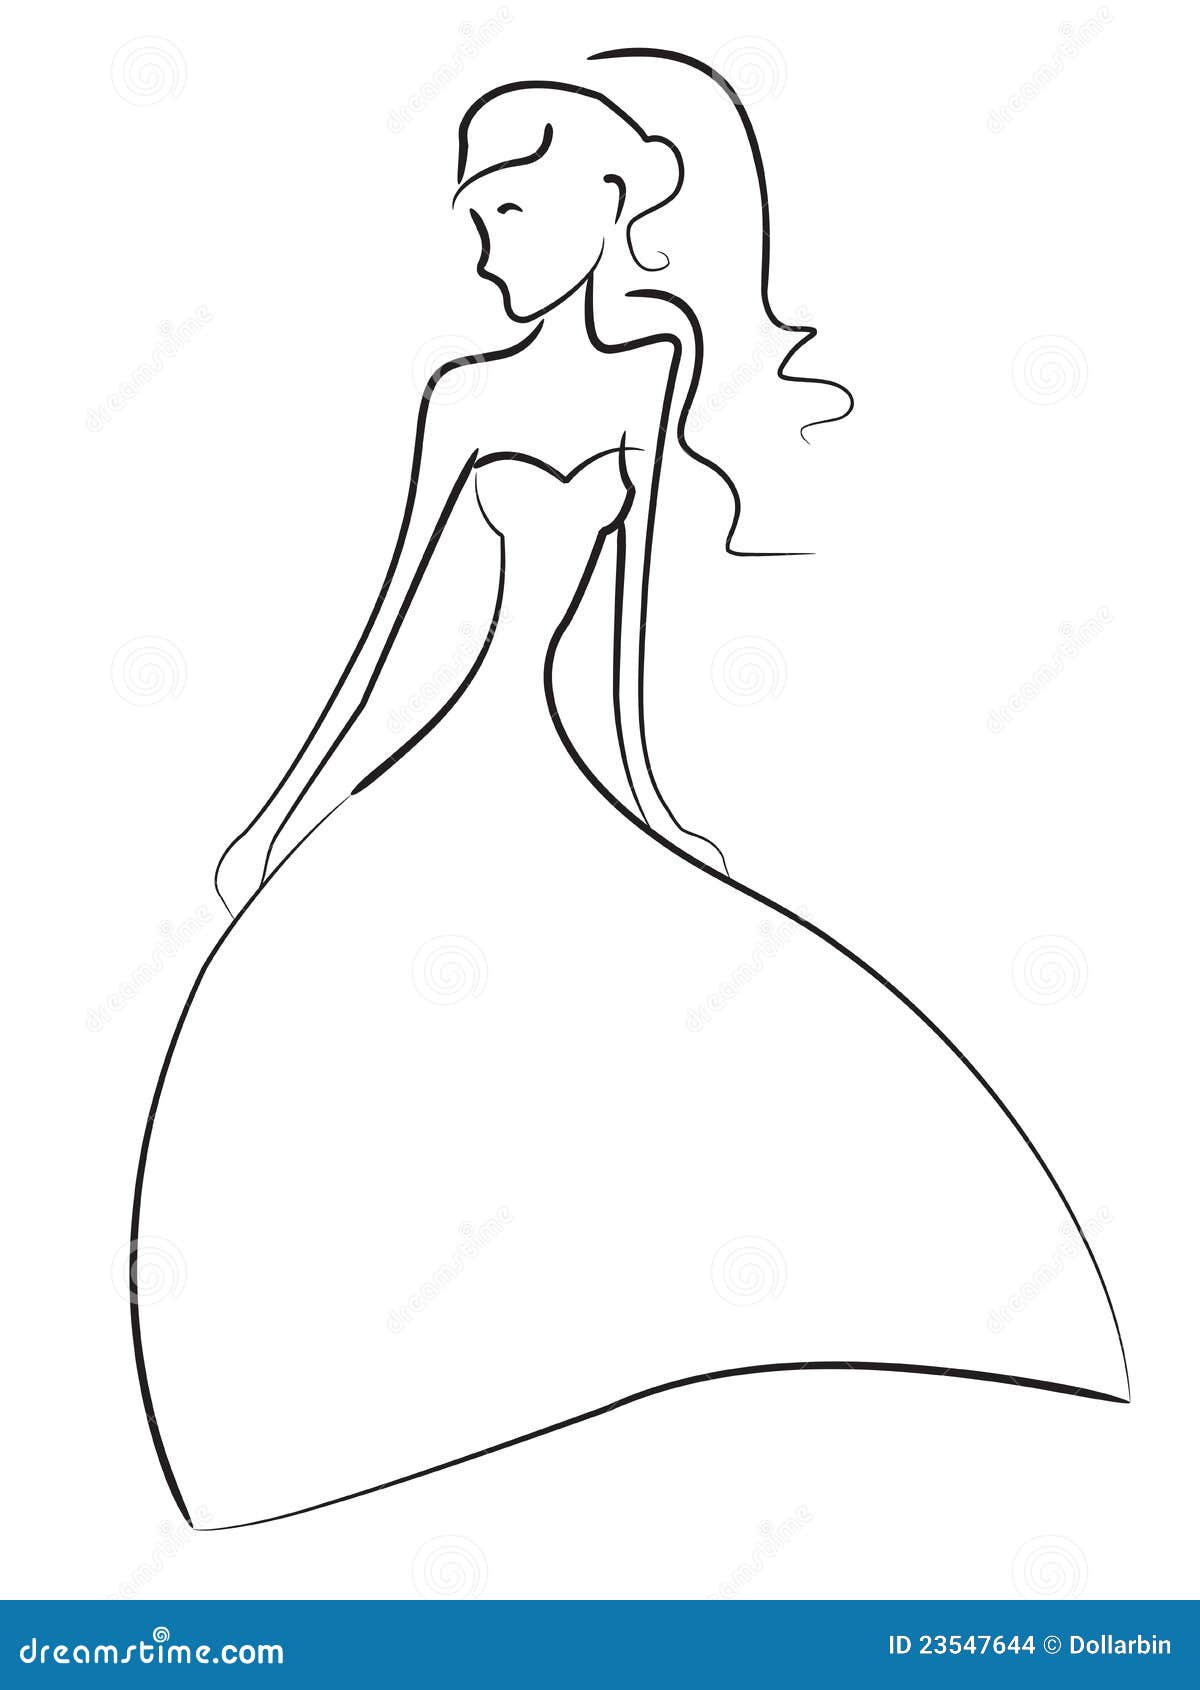 Bride sketch stock vector. Illustration of body, fashion - 23547644